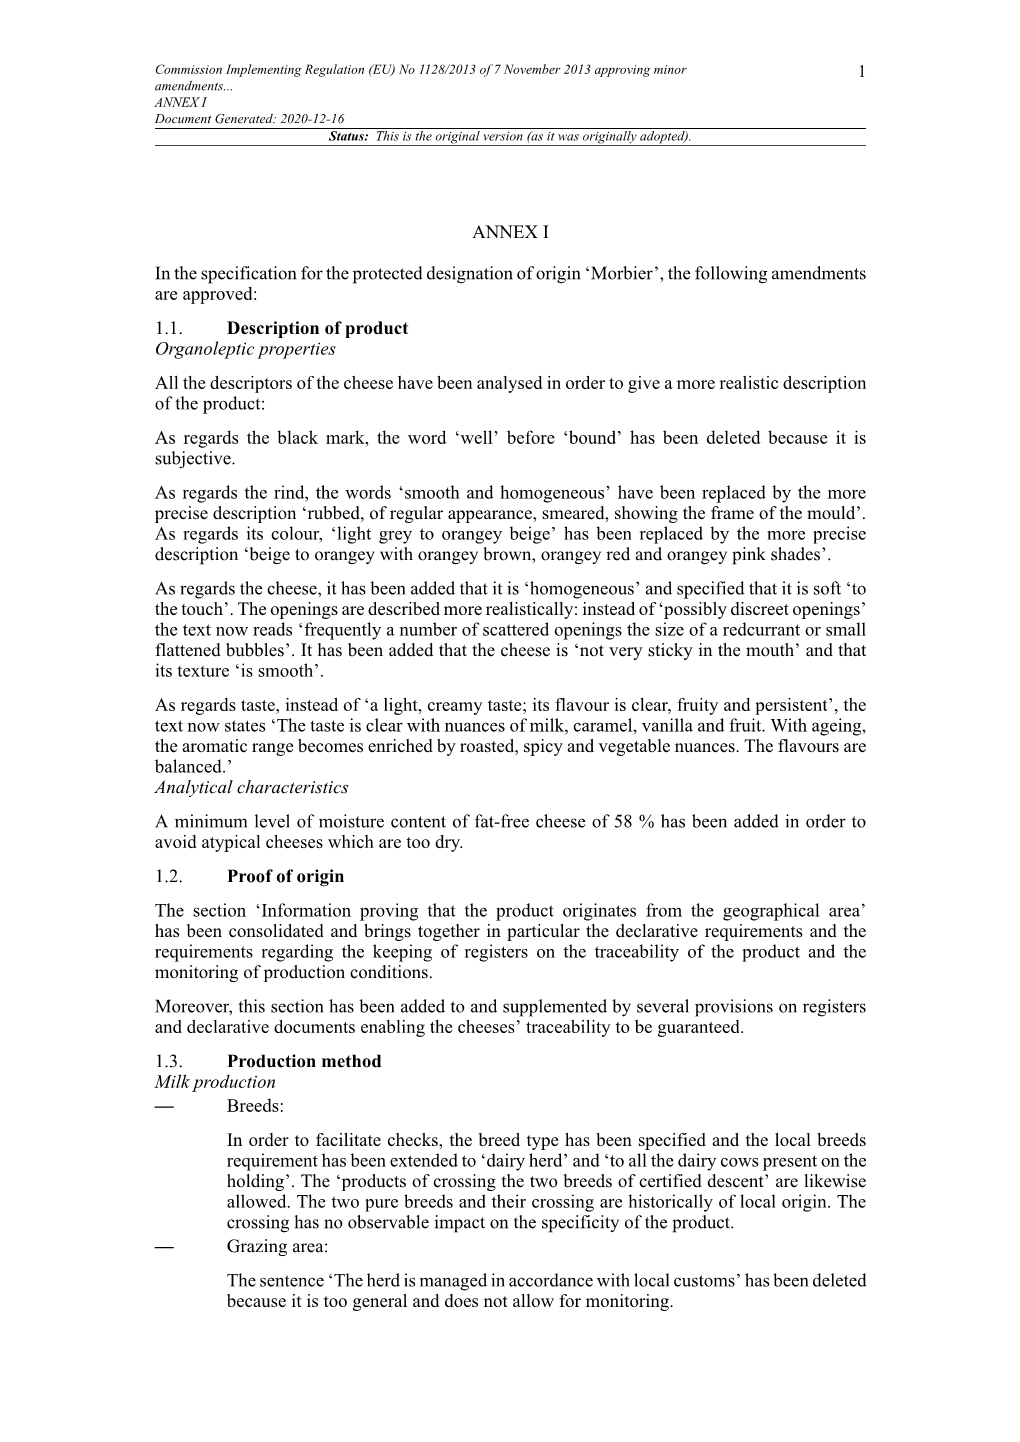 Commission Implementing Regulation (EU) No 1128/2013 of 7 November 2013 Approving Minor 1 Amendments